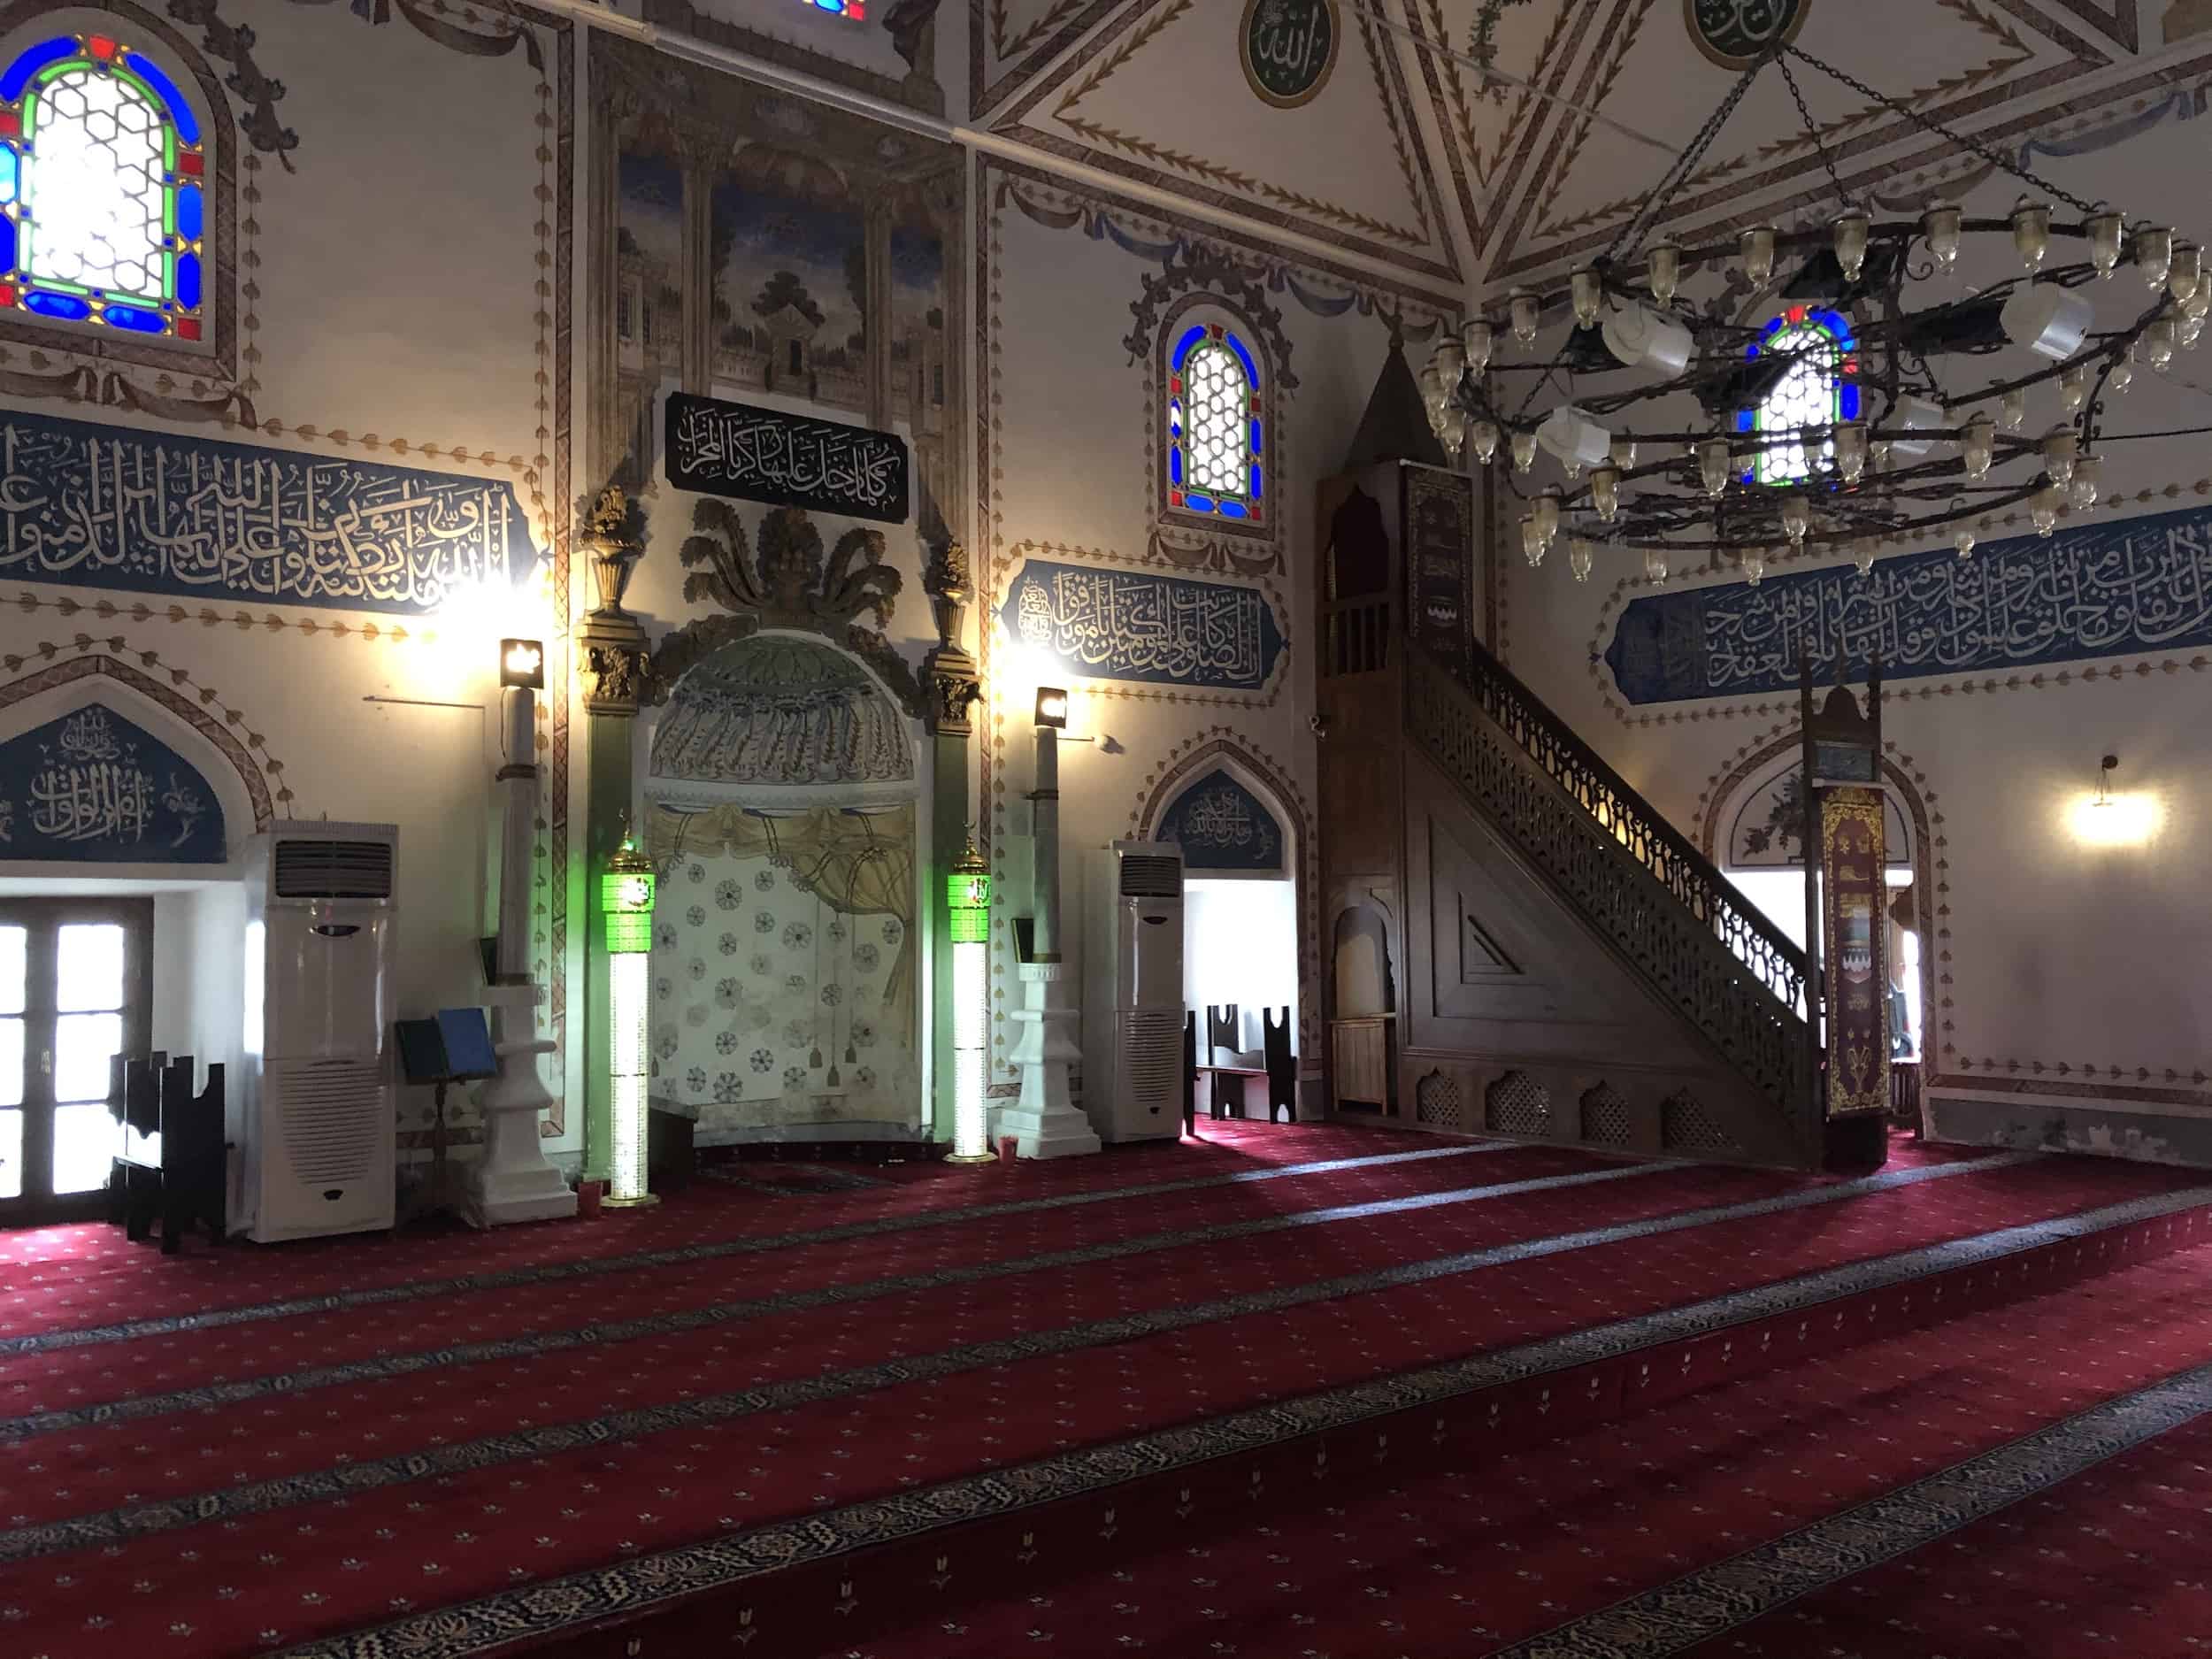 Prayer hall at the Hızırbey Mosque in Kırklareli, Turkey